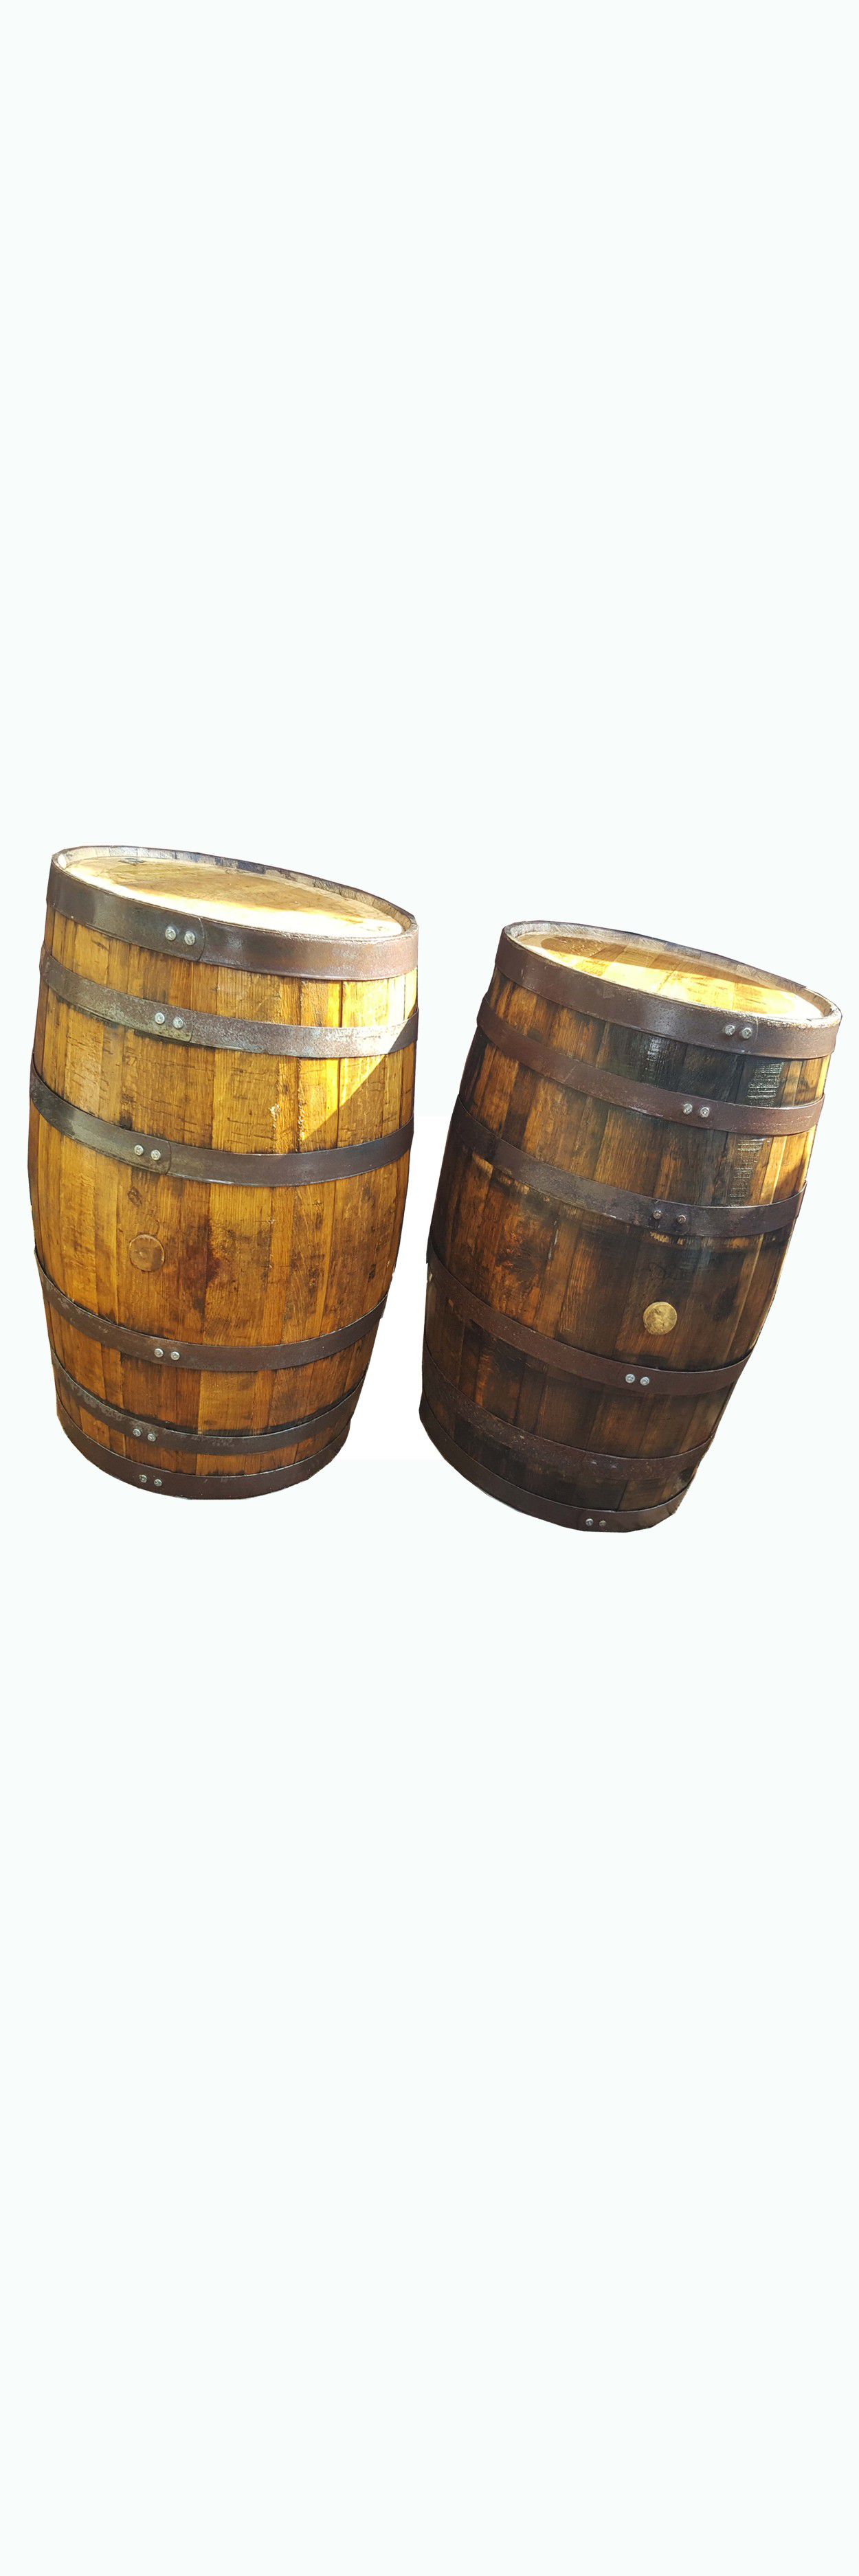 Antique whiskey wine wood barrel 4r dec○ restaurant sports bar smoke shop tiki bar patio furniture